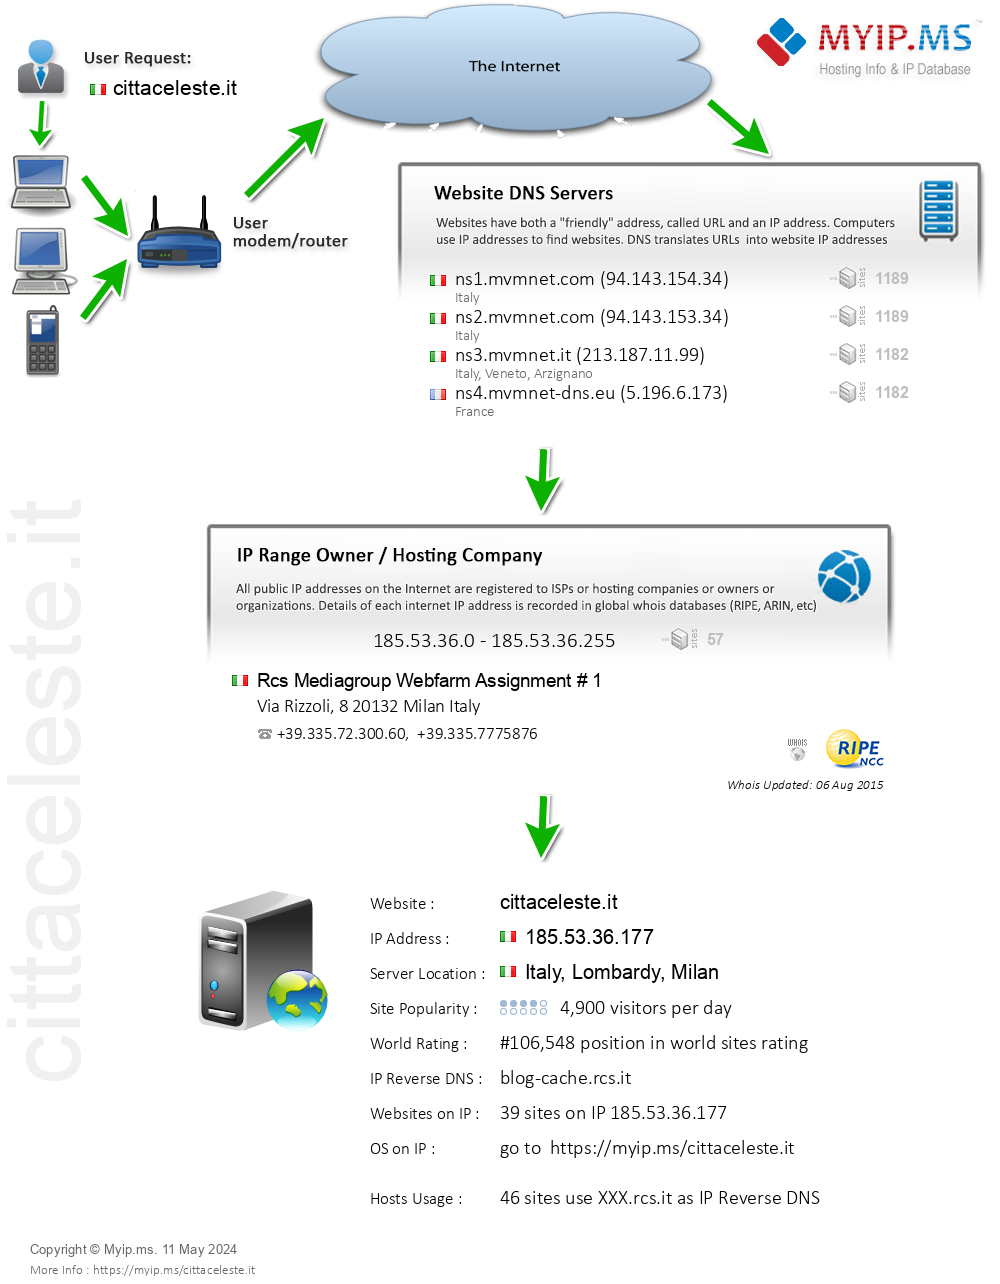 Cittaceleste.it - Website Hosting Visual IP Diagram